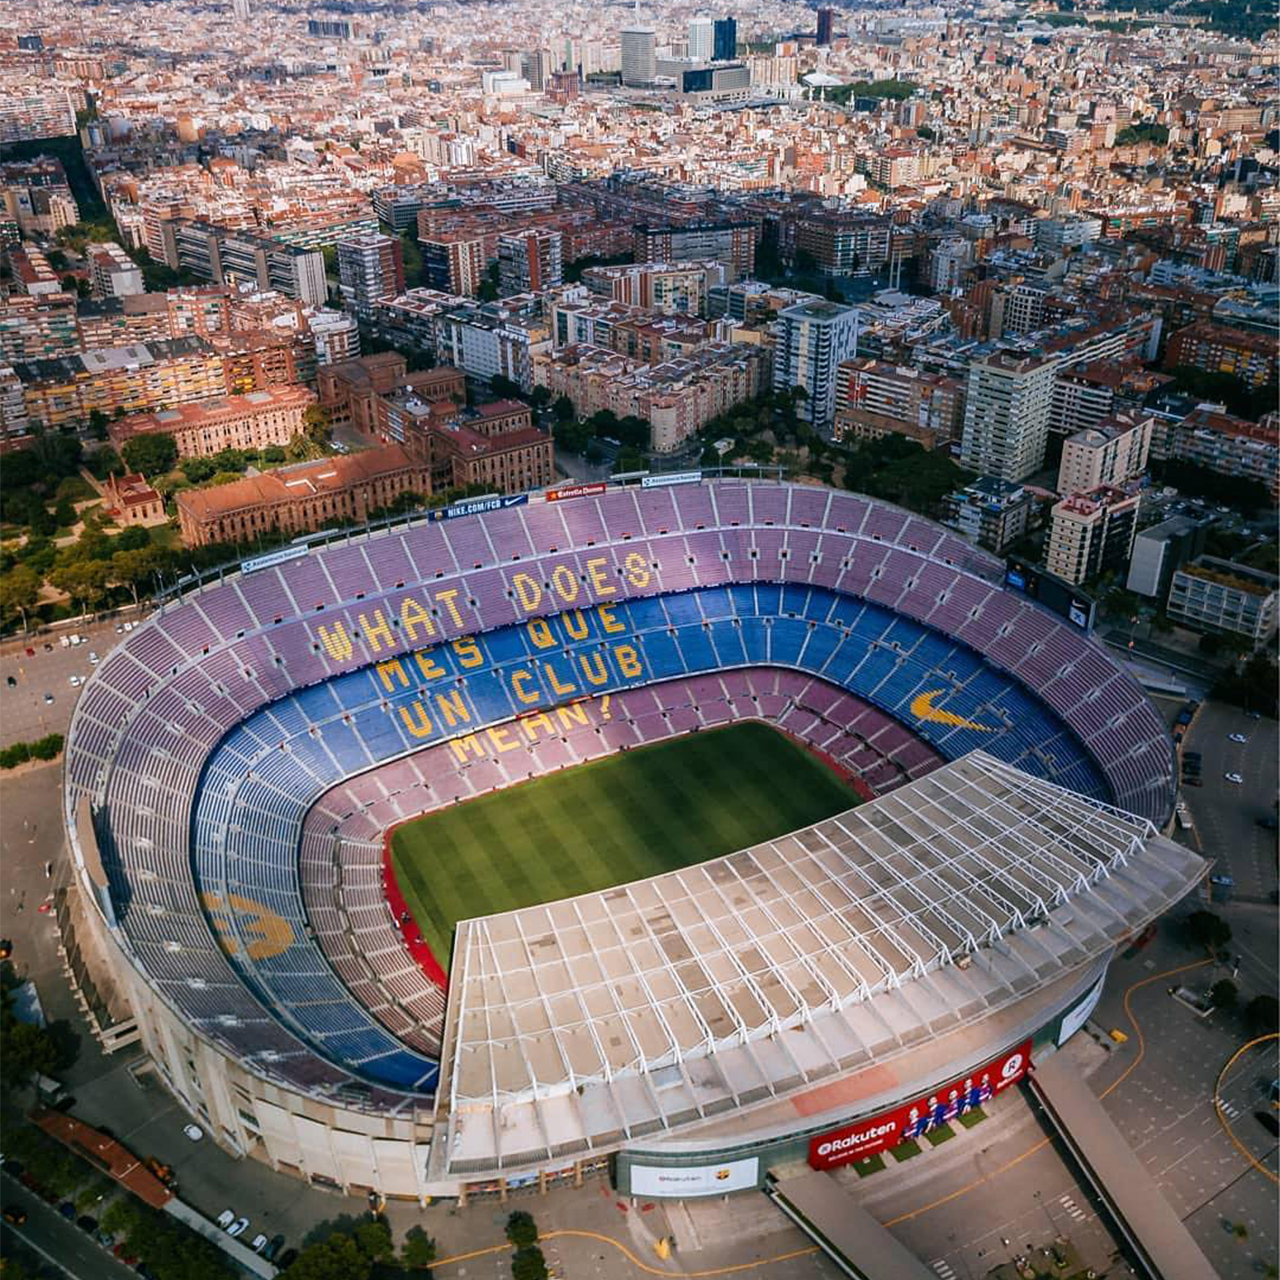 Стадион выше. Камп ноу стадион. Стадион Камп ноу в Барселоне. Стадион Camp nou. Барселона футбольный стадион Камп ноу.